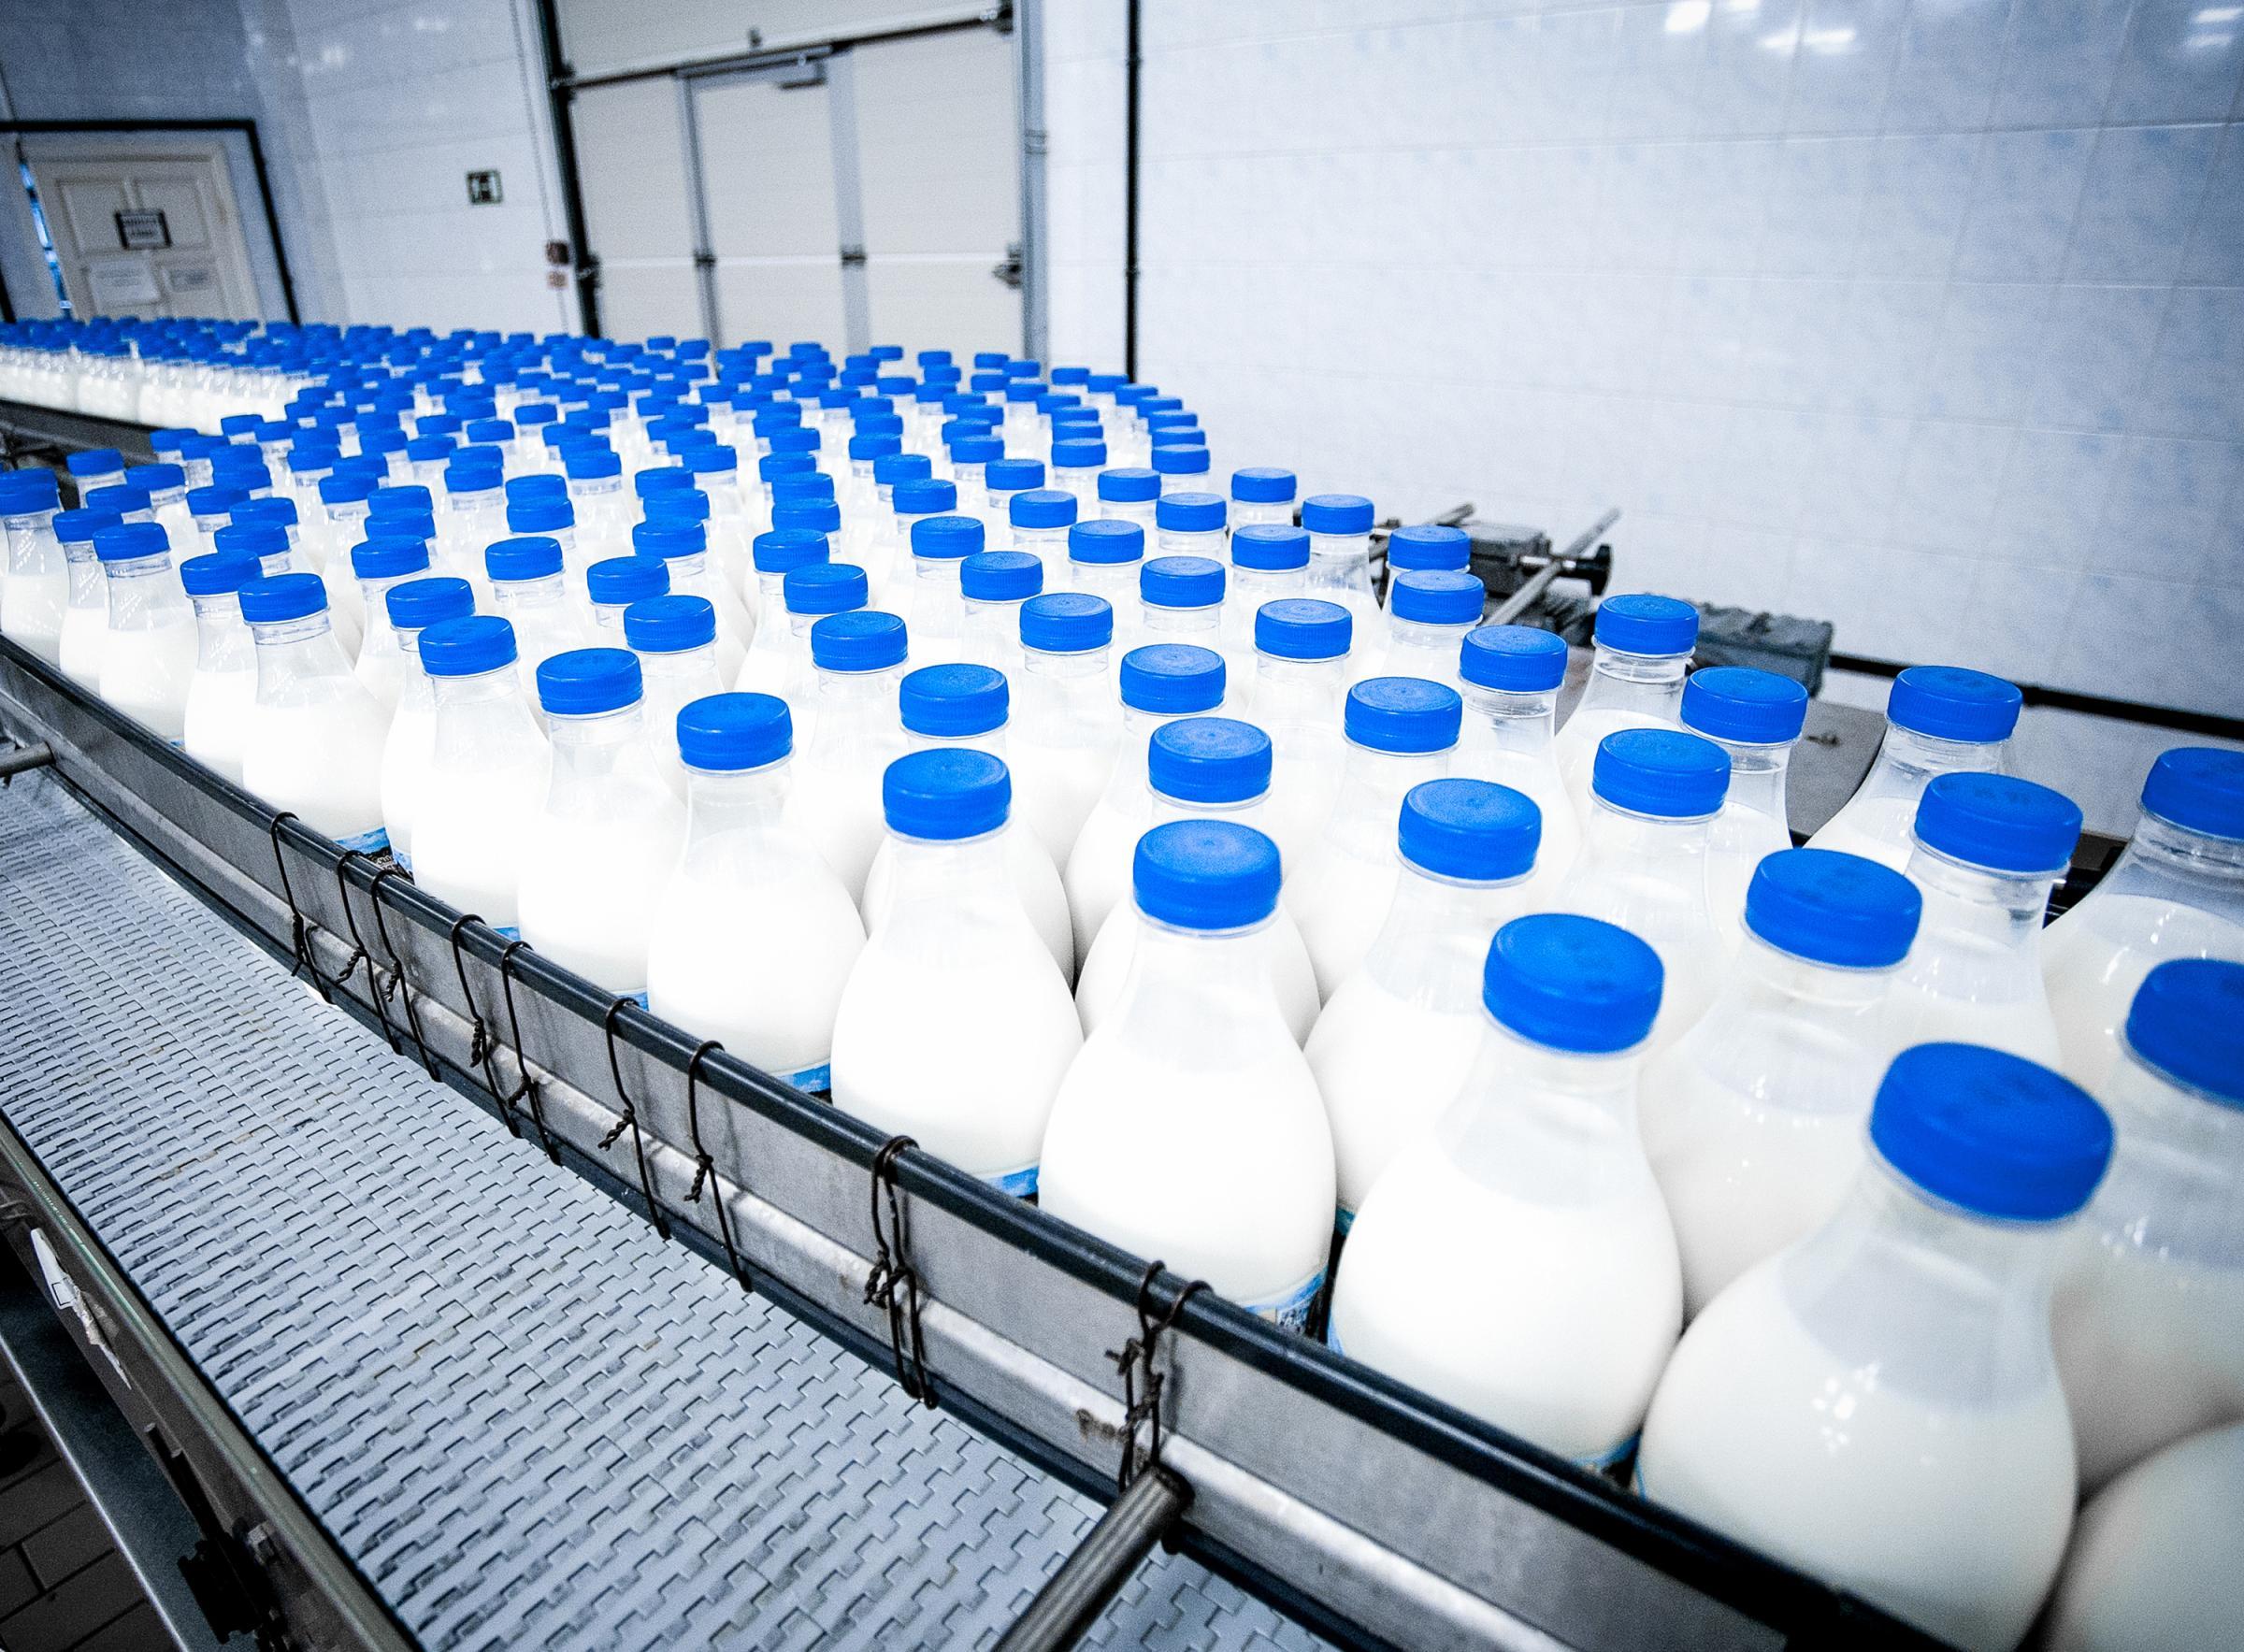 Milk in a factory